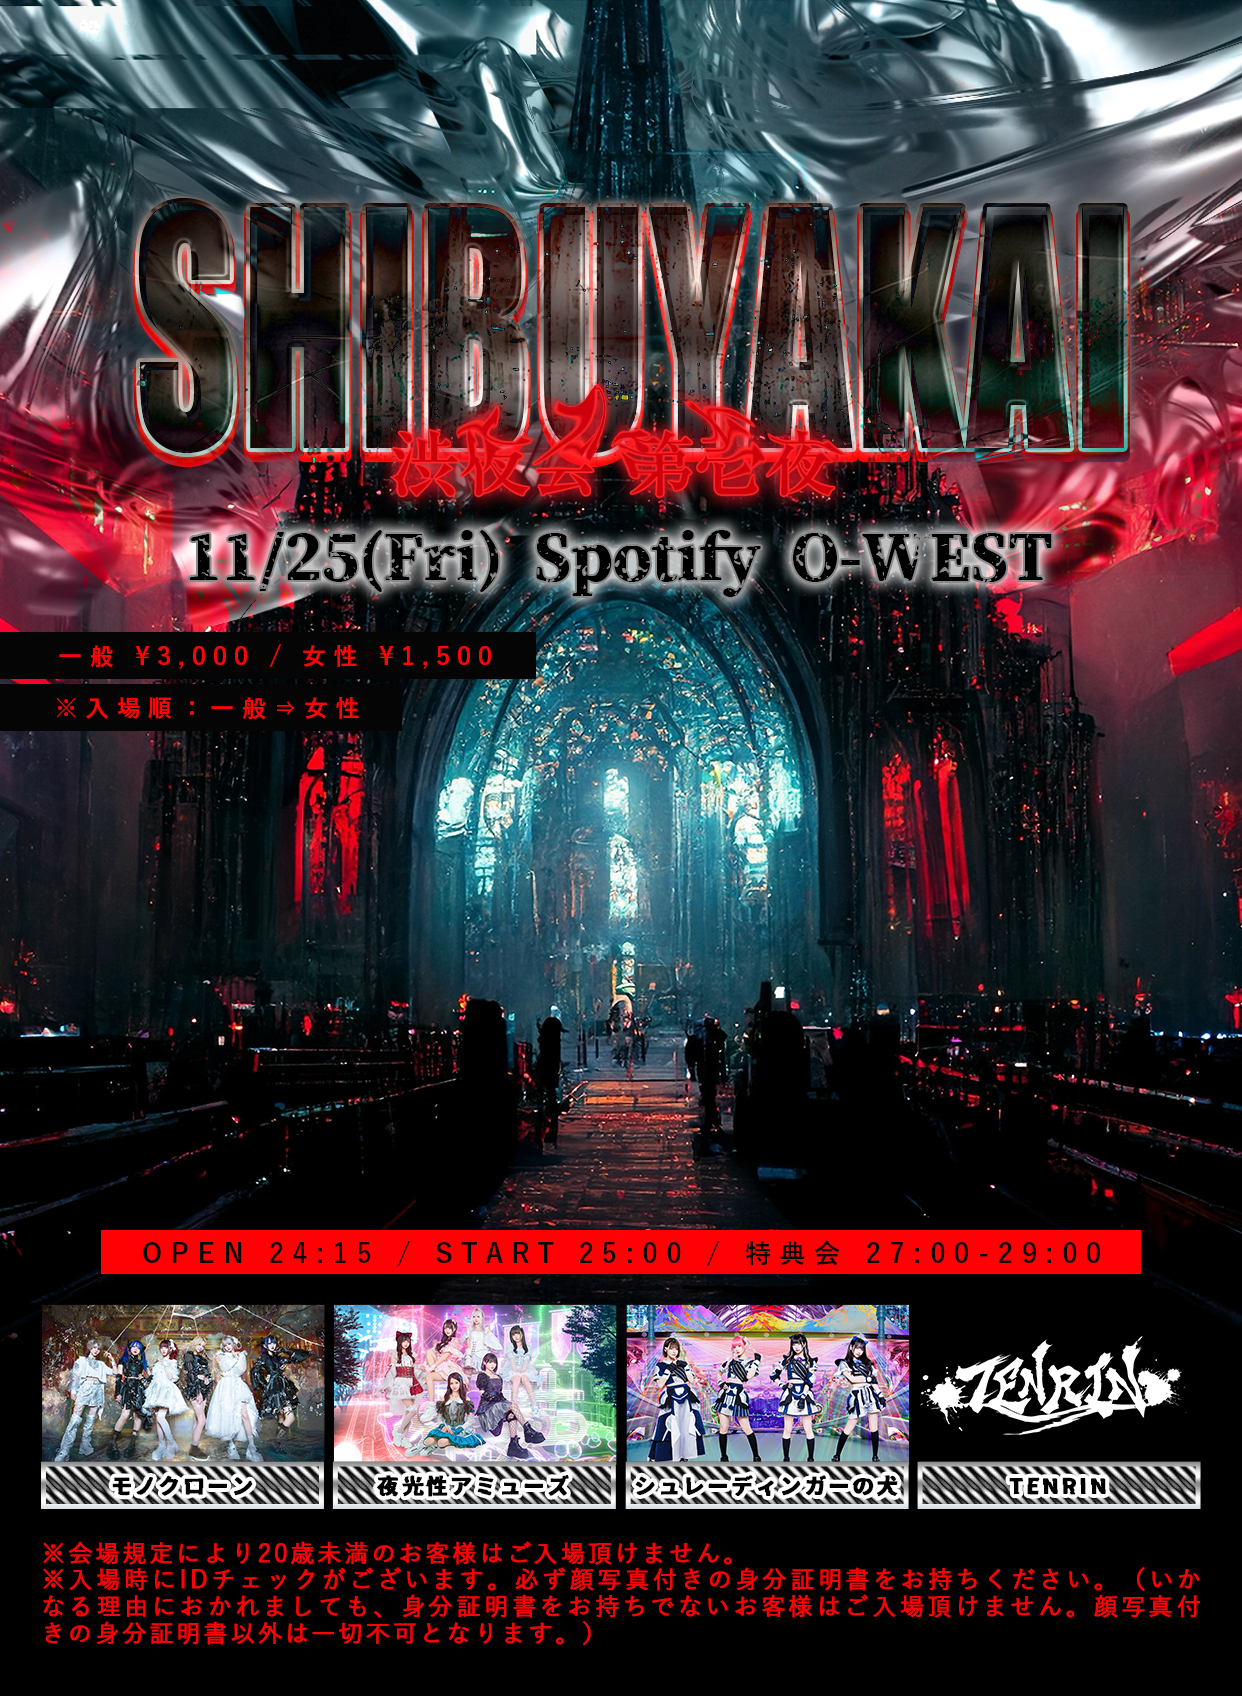 SHIBUYAKAI – 渋夜会 第壱夜 | Spotify O-EAST・O-WEST・O-Crest・O-nest